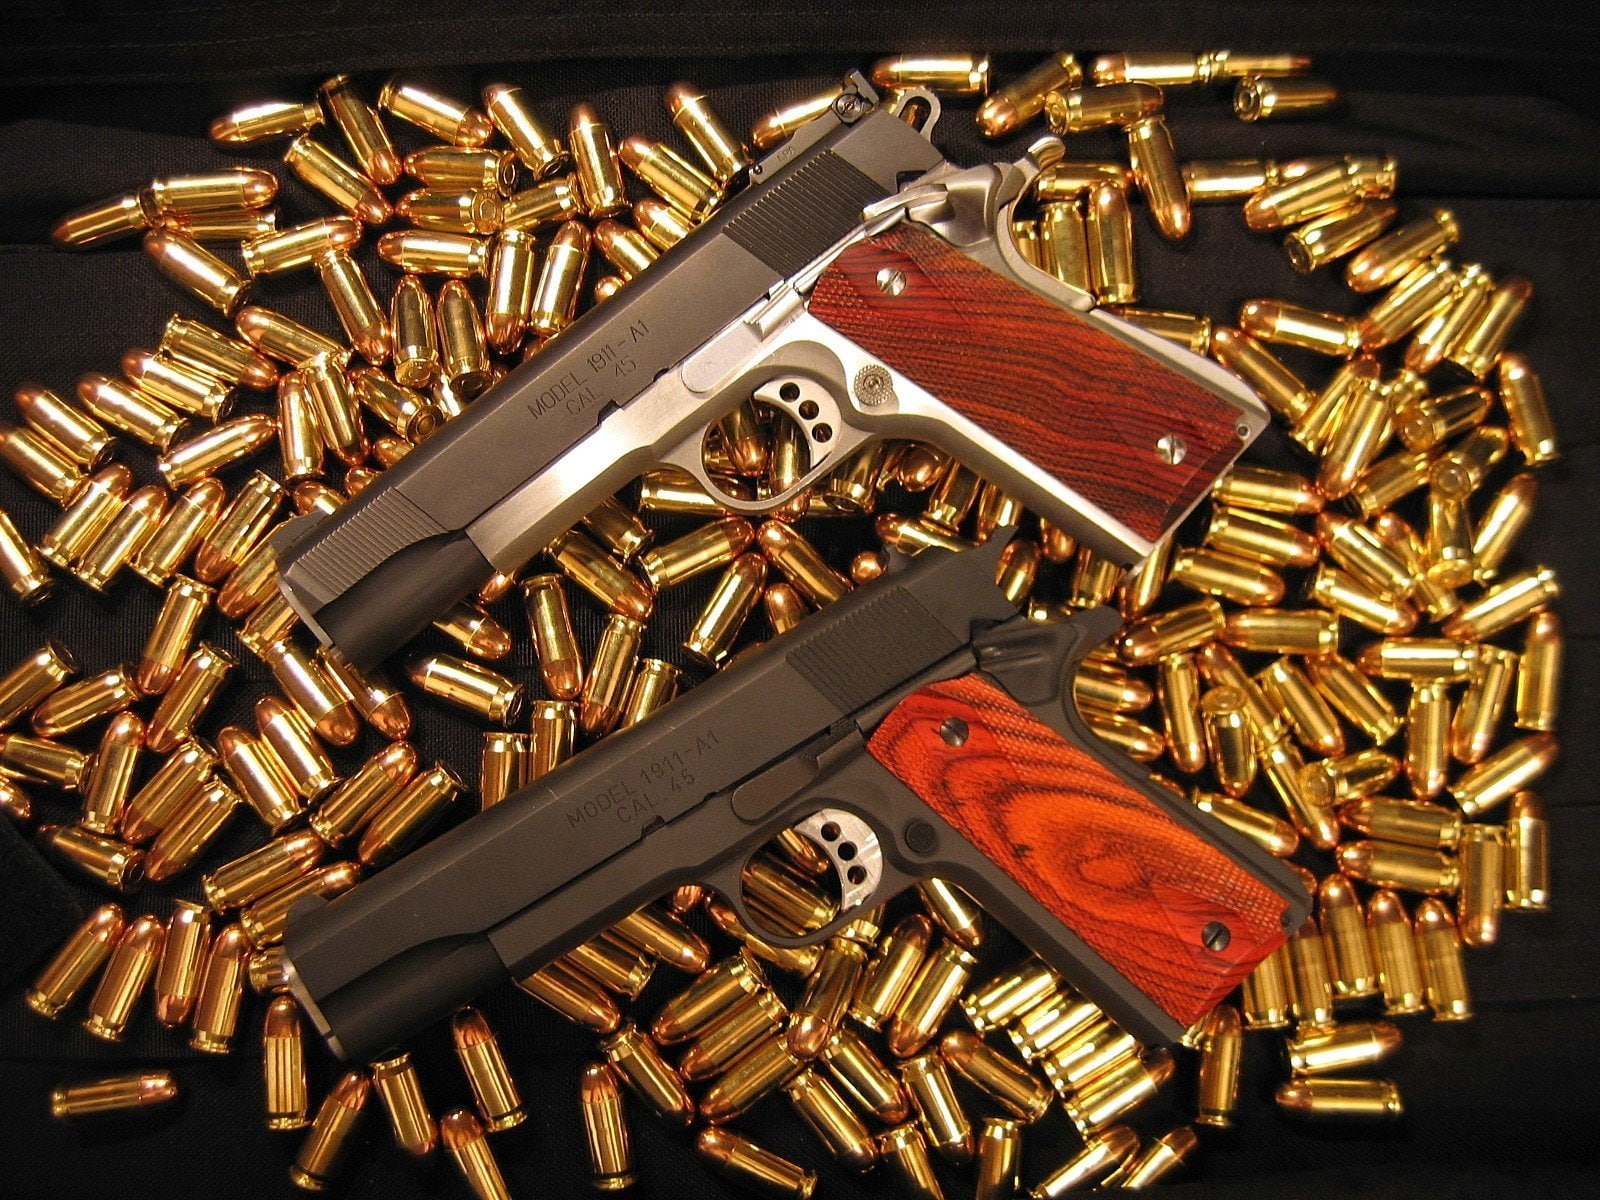 1911 m1911 handgun pistol gun, large group of objects, metal